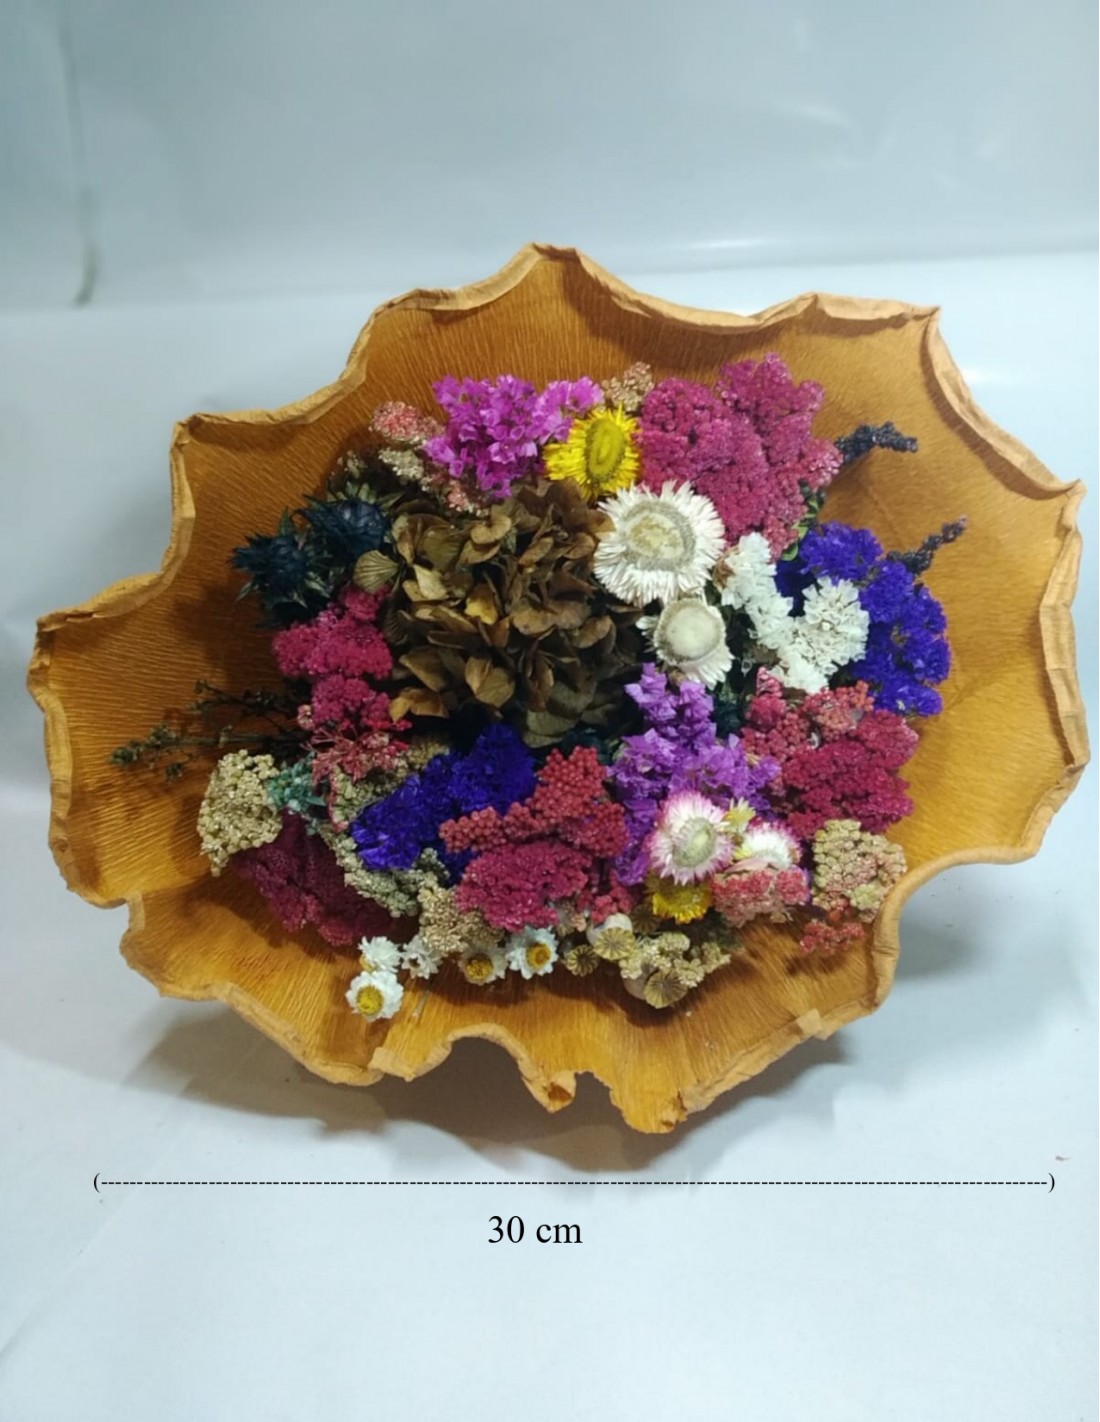  UDF Regalo de flores preservadas, ramo de flores secas